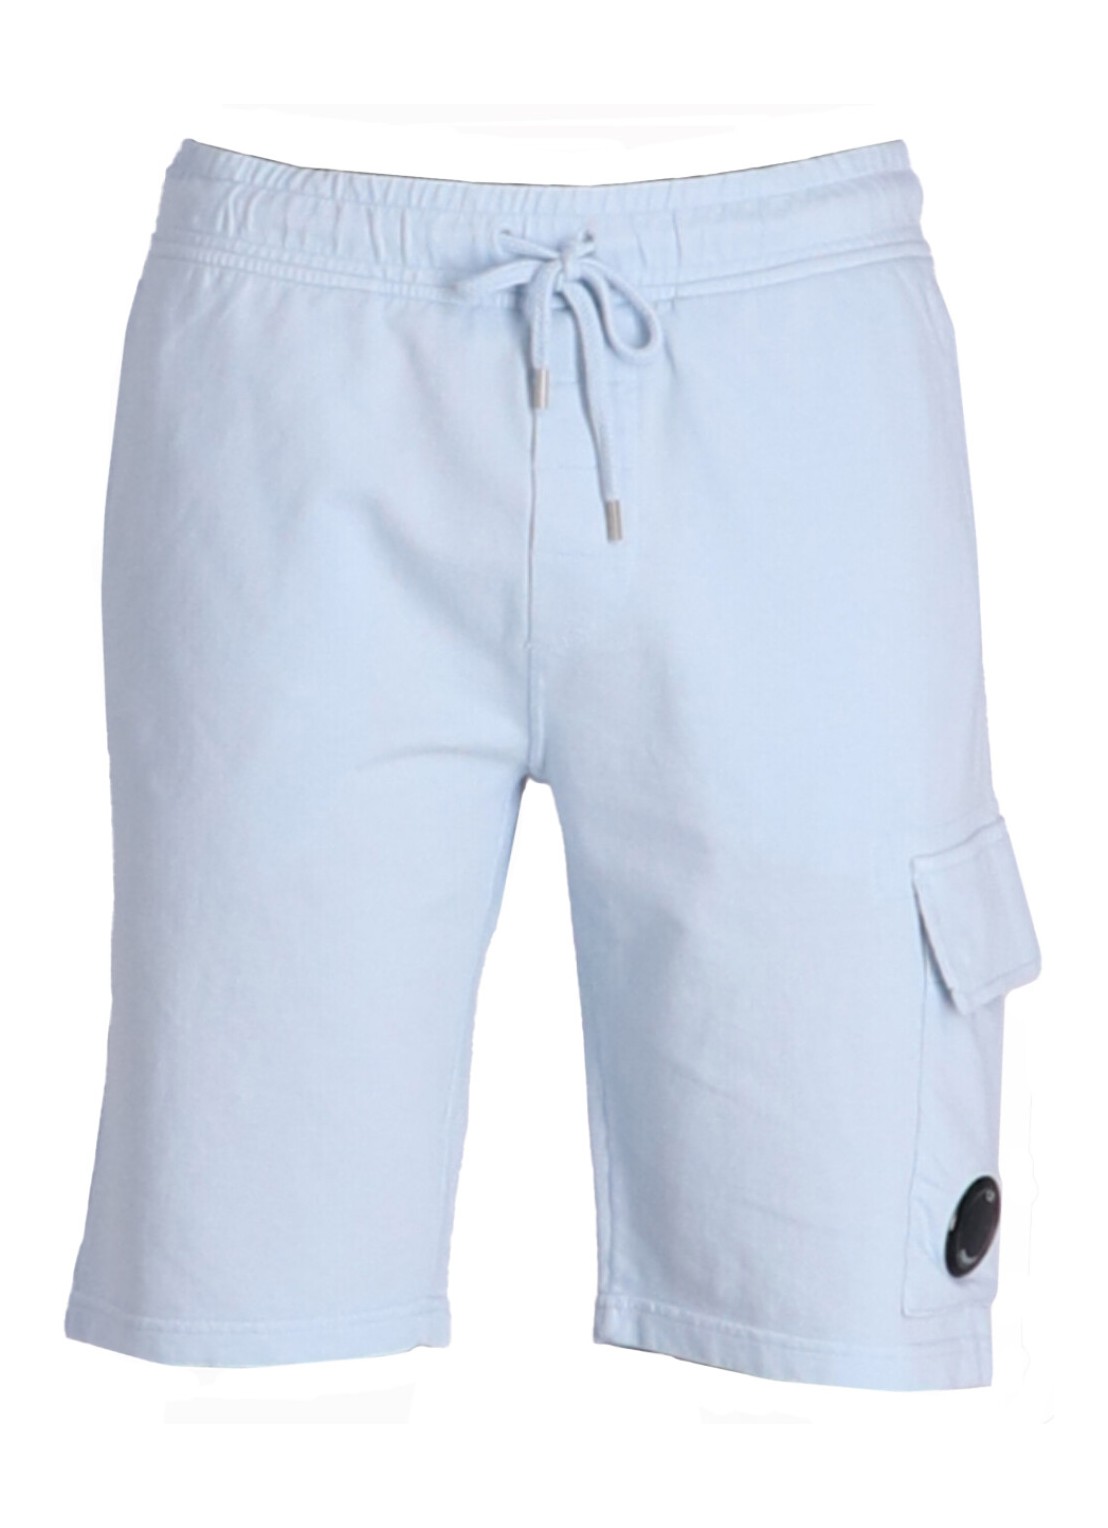 Pantalon corto c.p.company short pant man light fleece utility shorts 16cmsb021a002246g 806 talla Az